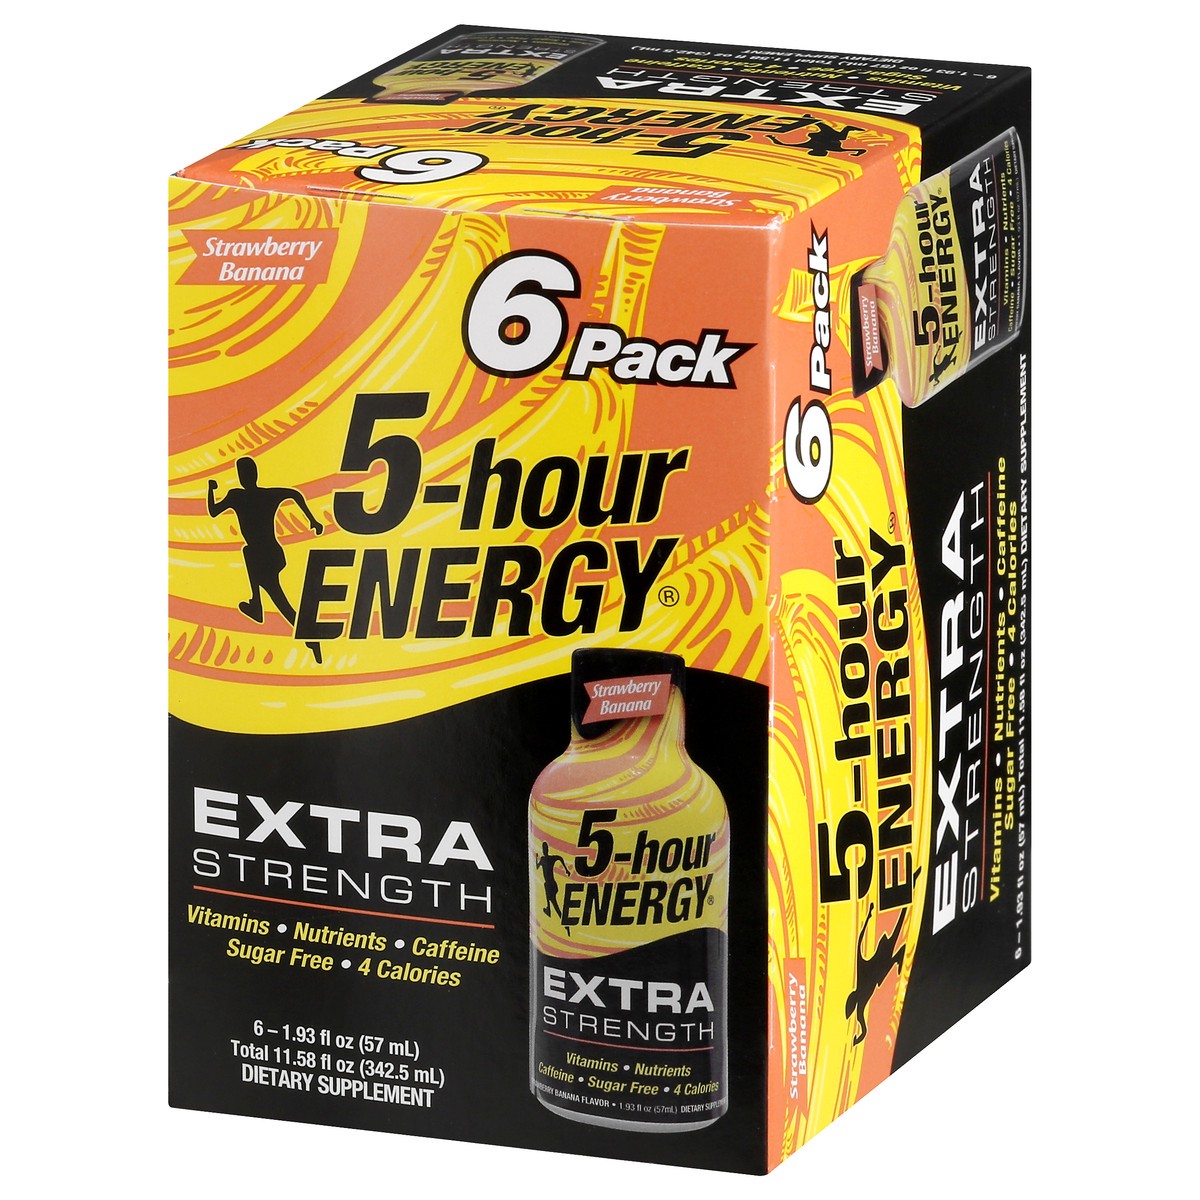 slide 8 of 9, 5-hour Energy, Extra Strength, Strawberry Banana, 6-pack, 6 ct